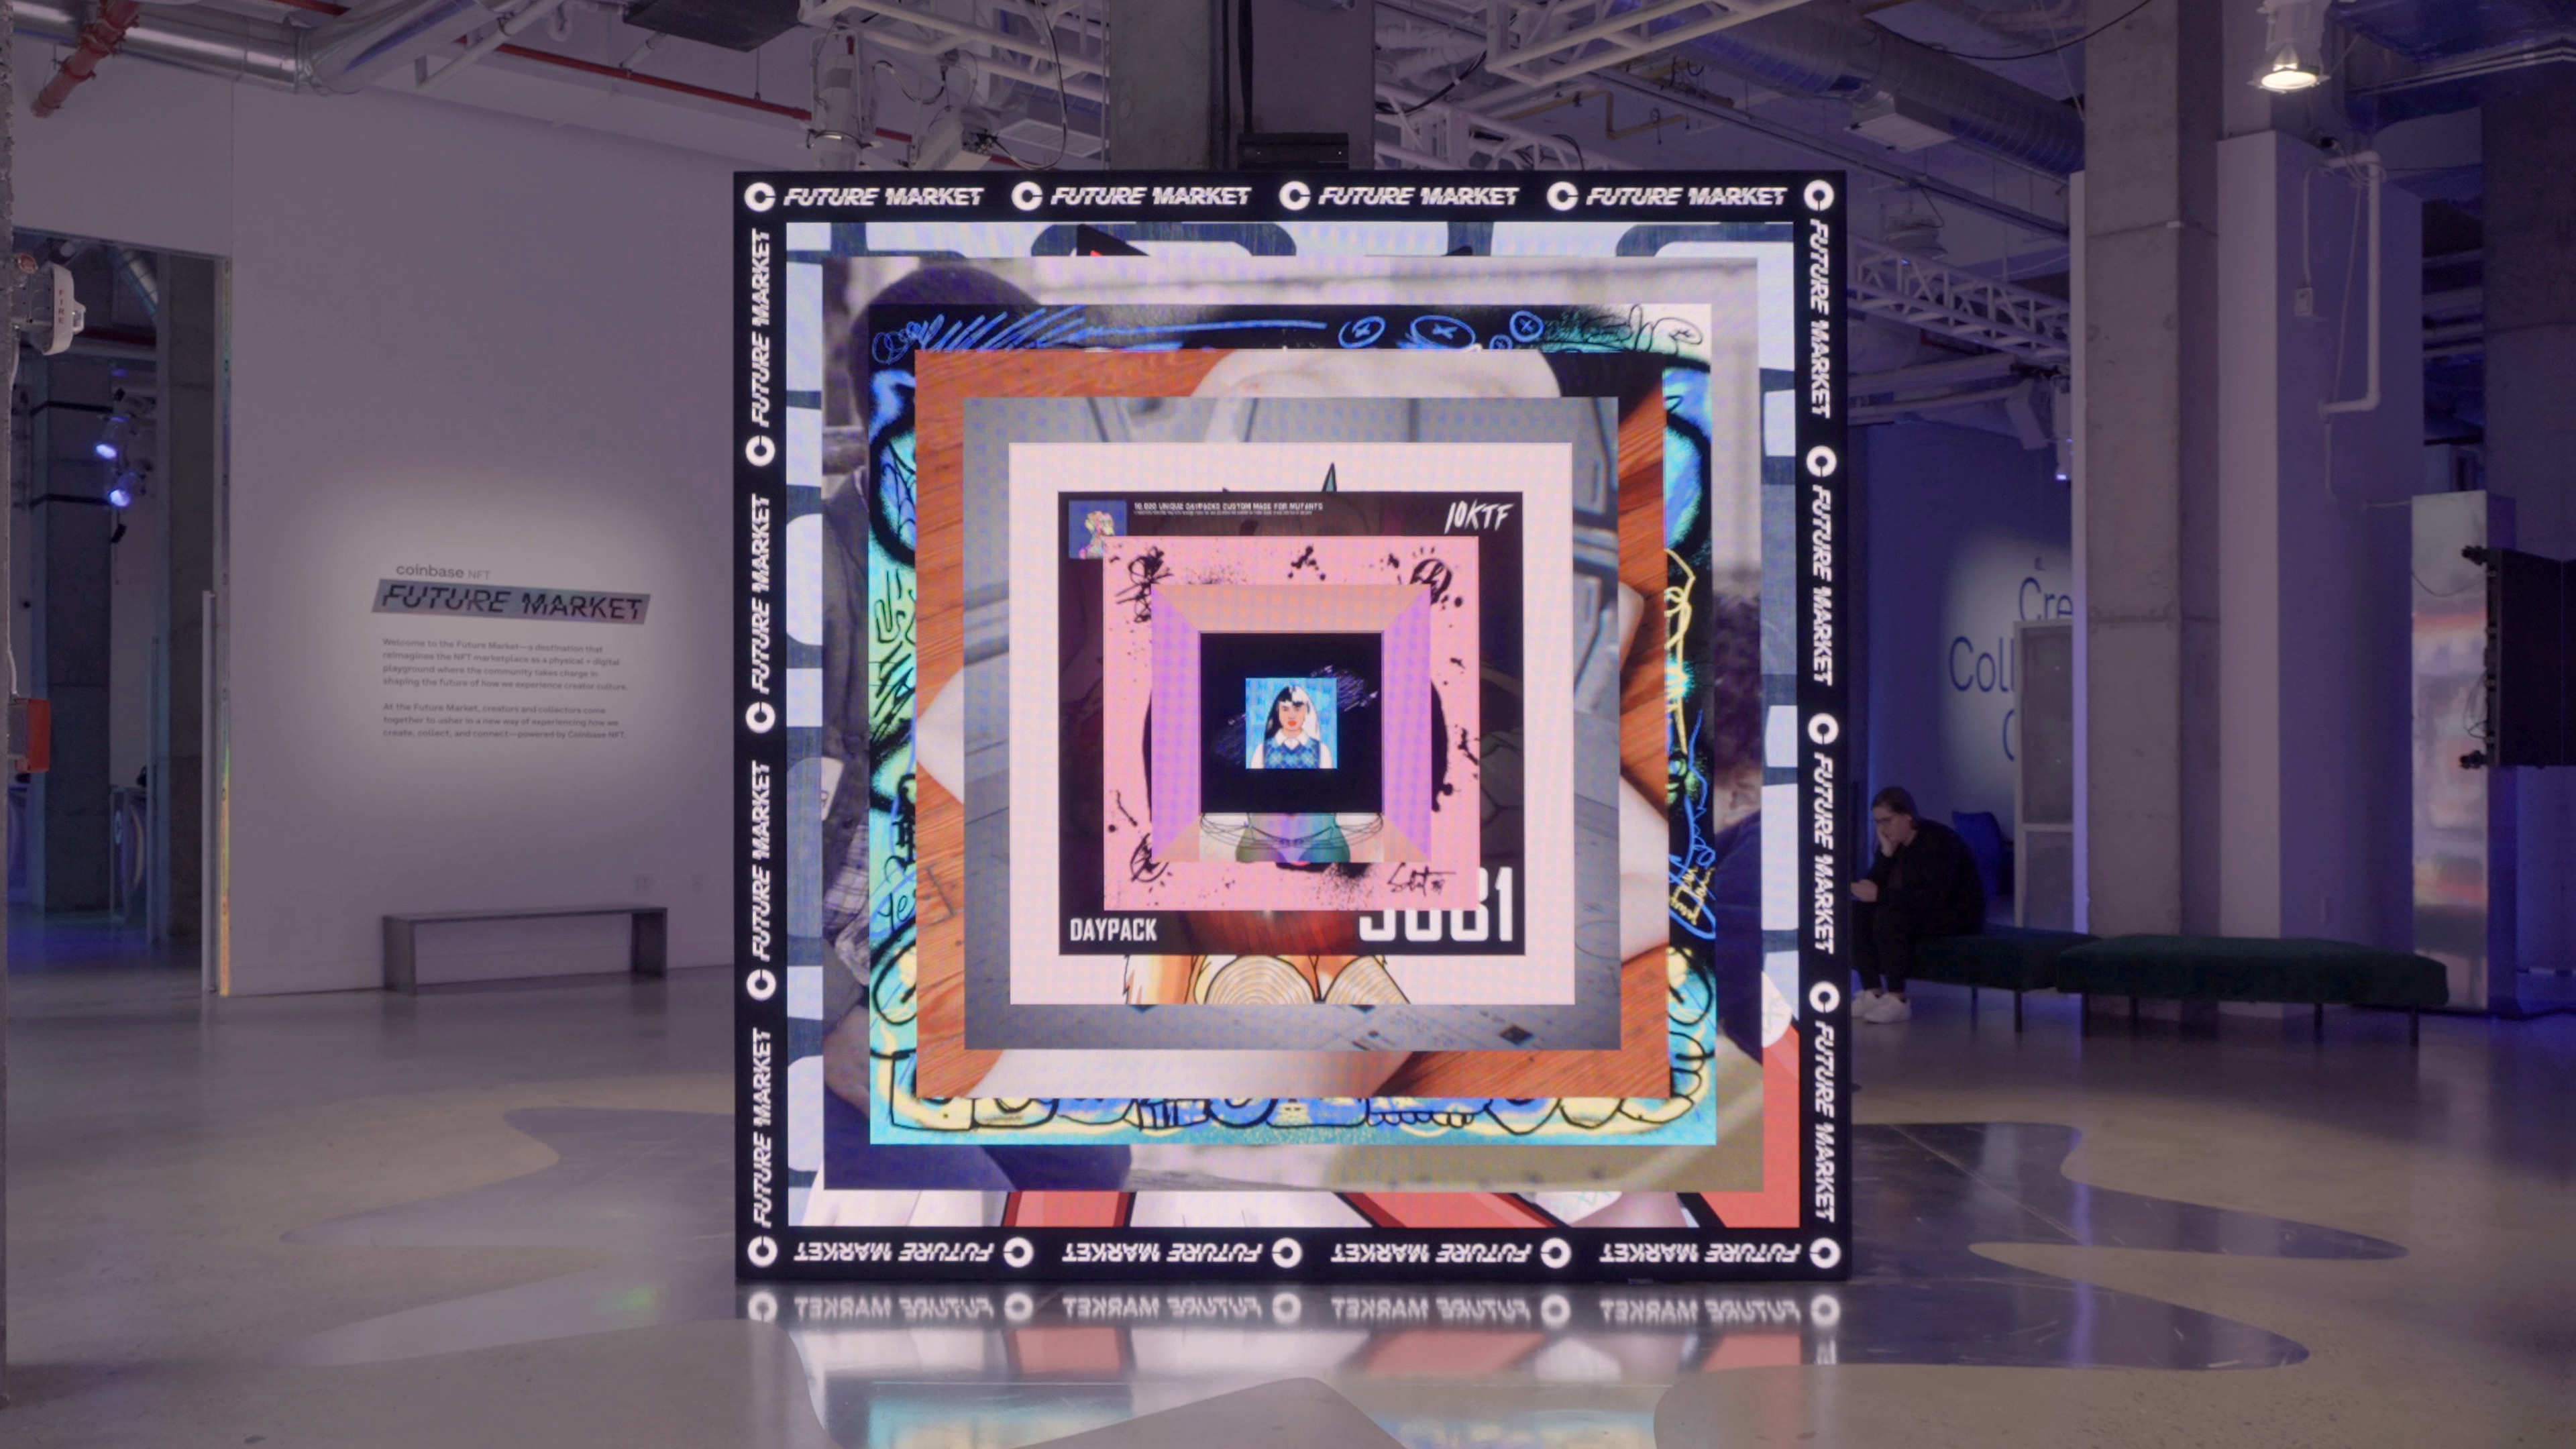 FutureMarket Interactive Art Installation by Red Paper Heart.